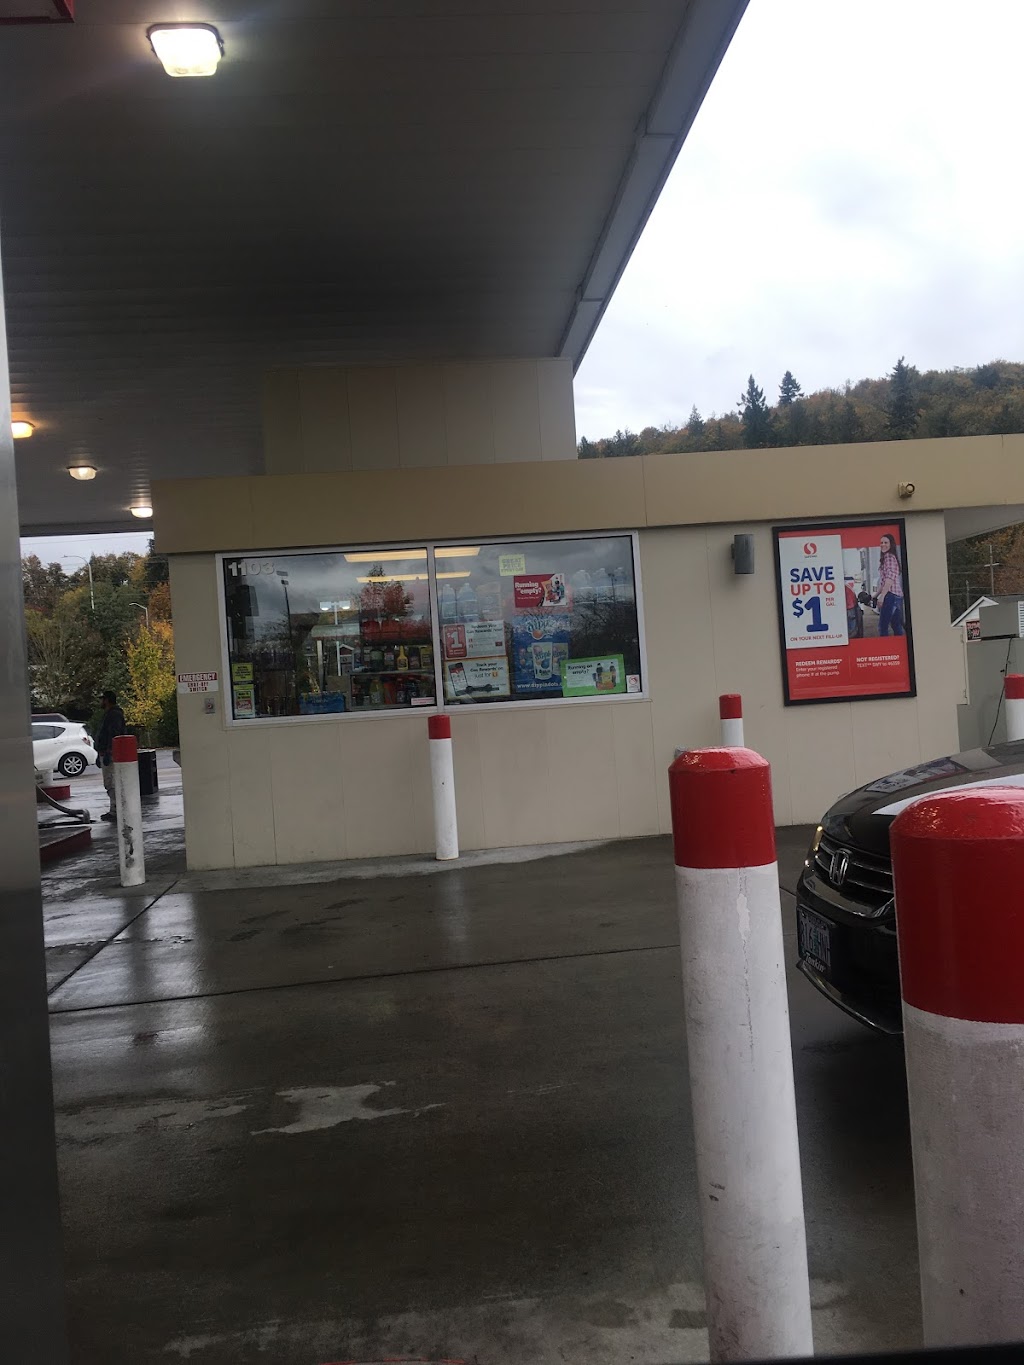 Safeway Fuel Station | 1103 SW Highland Dr, Gresham, OR 97080 | Phone: (503) 674-7080